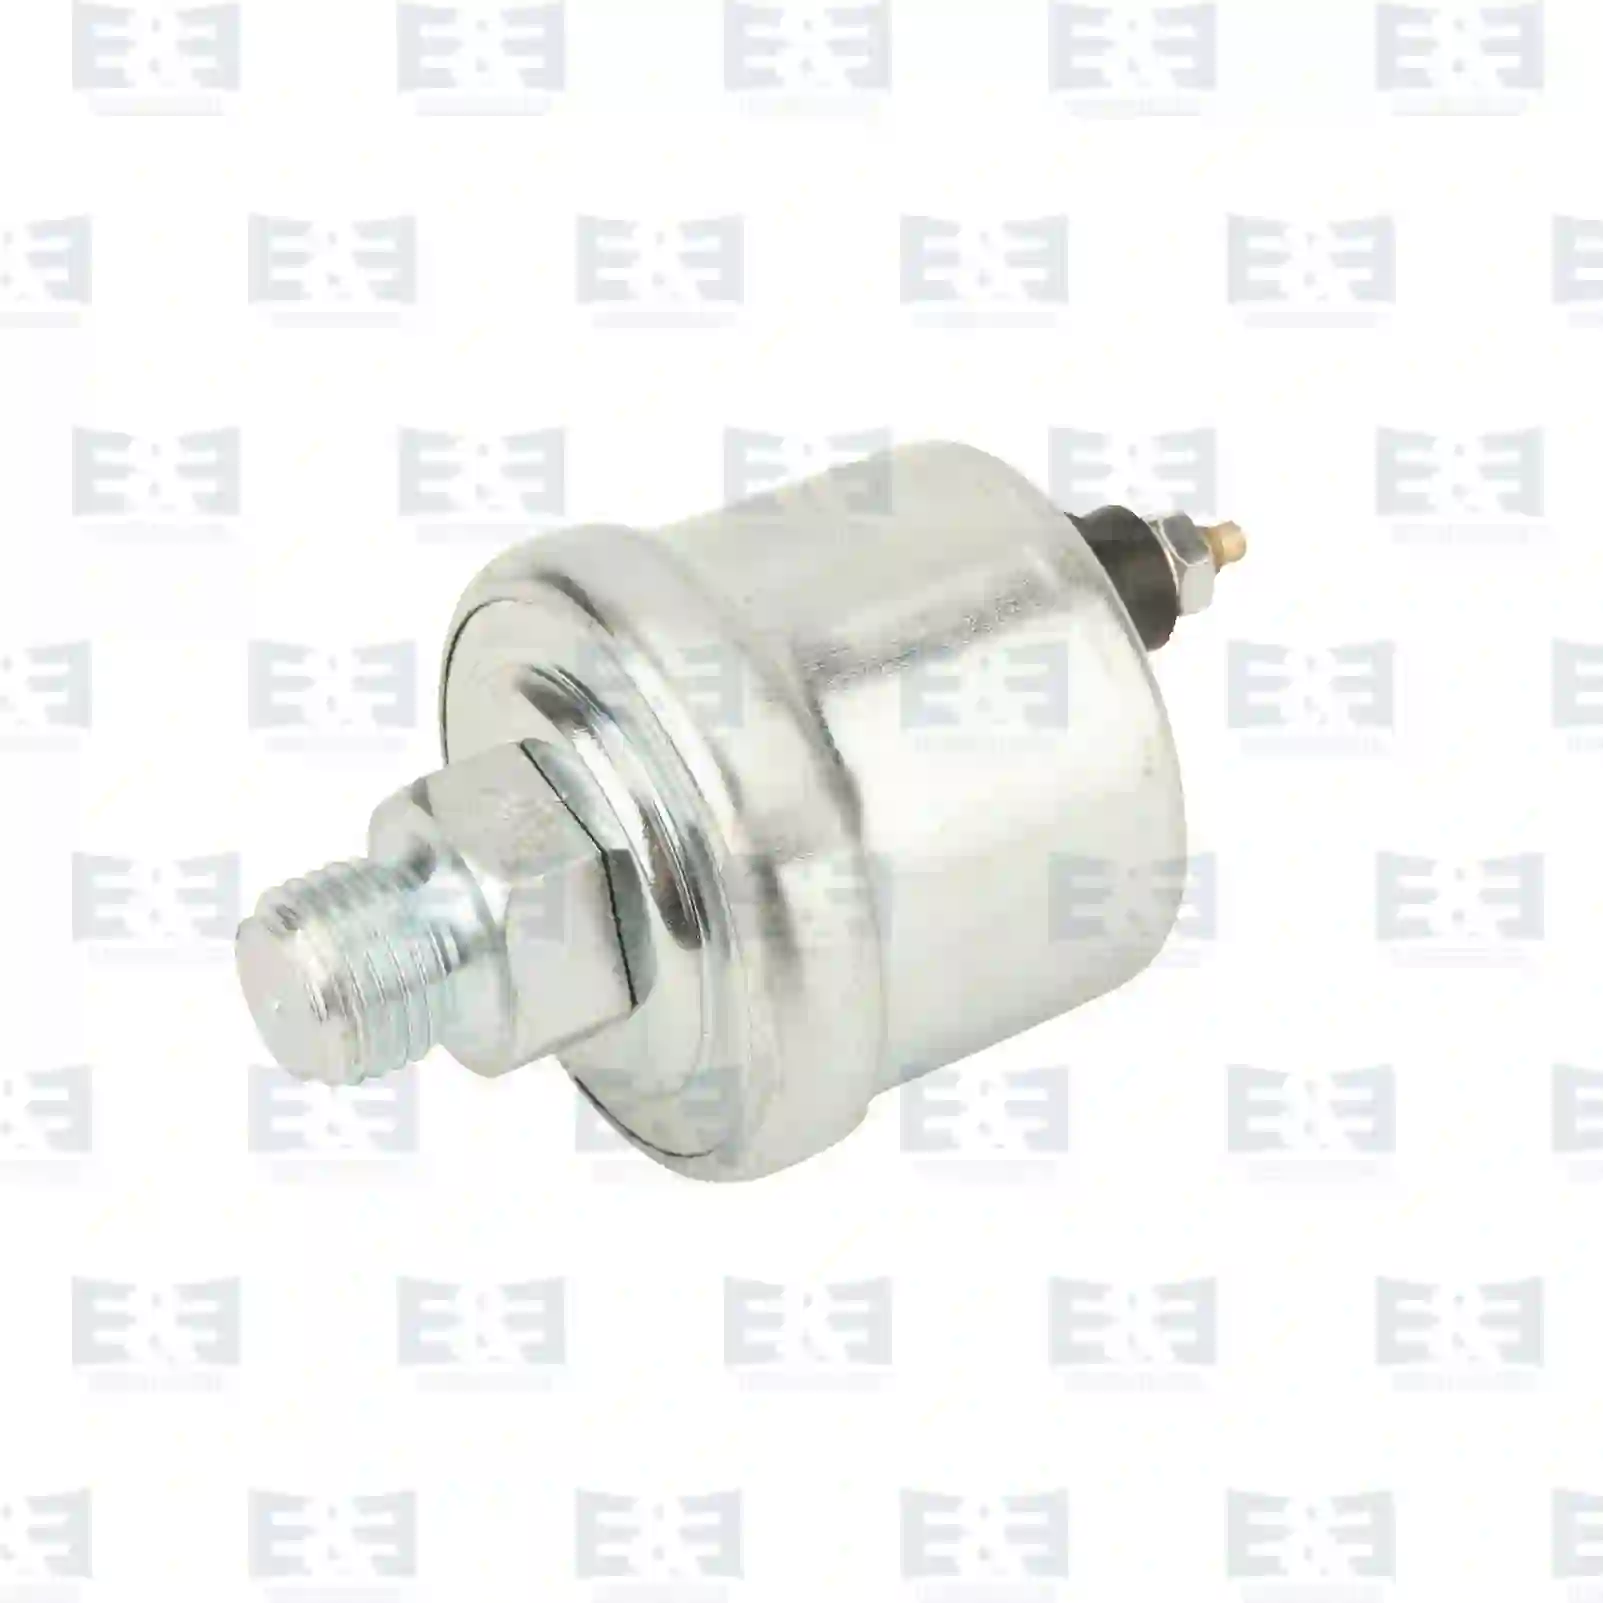  Oil pressure sensor || E&E Truck Spare Parts | Truck Spare Parts, Auotomotive Spare Parts